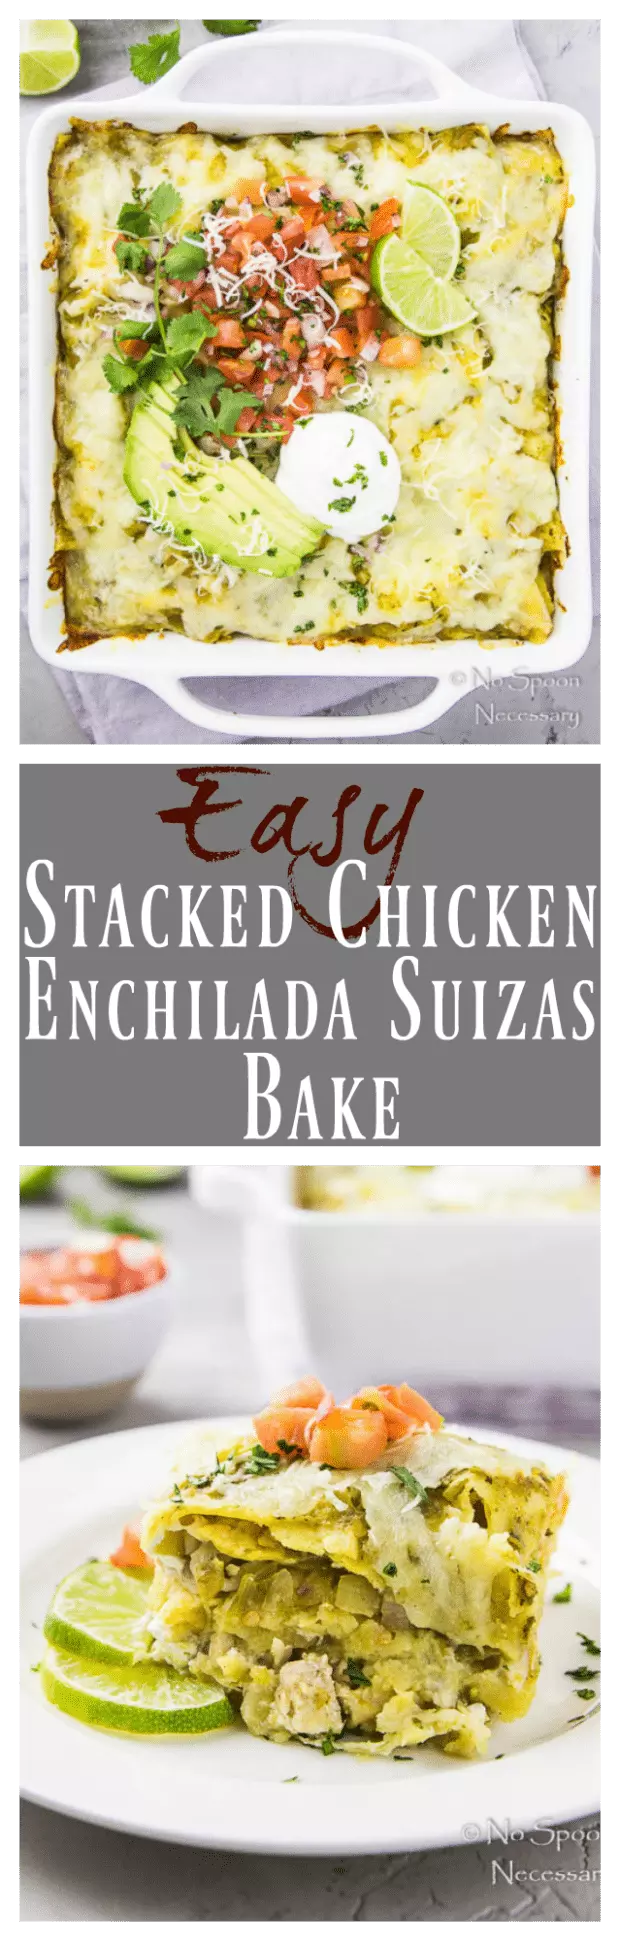 Easy Stacked Enchilada Suizas Bake